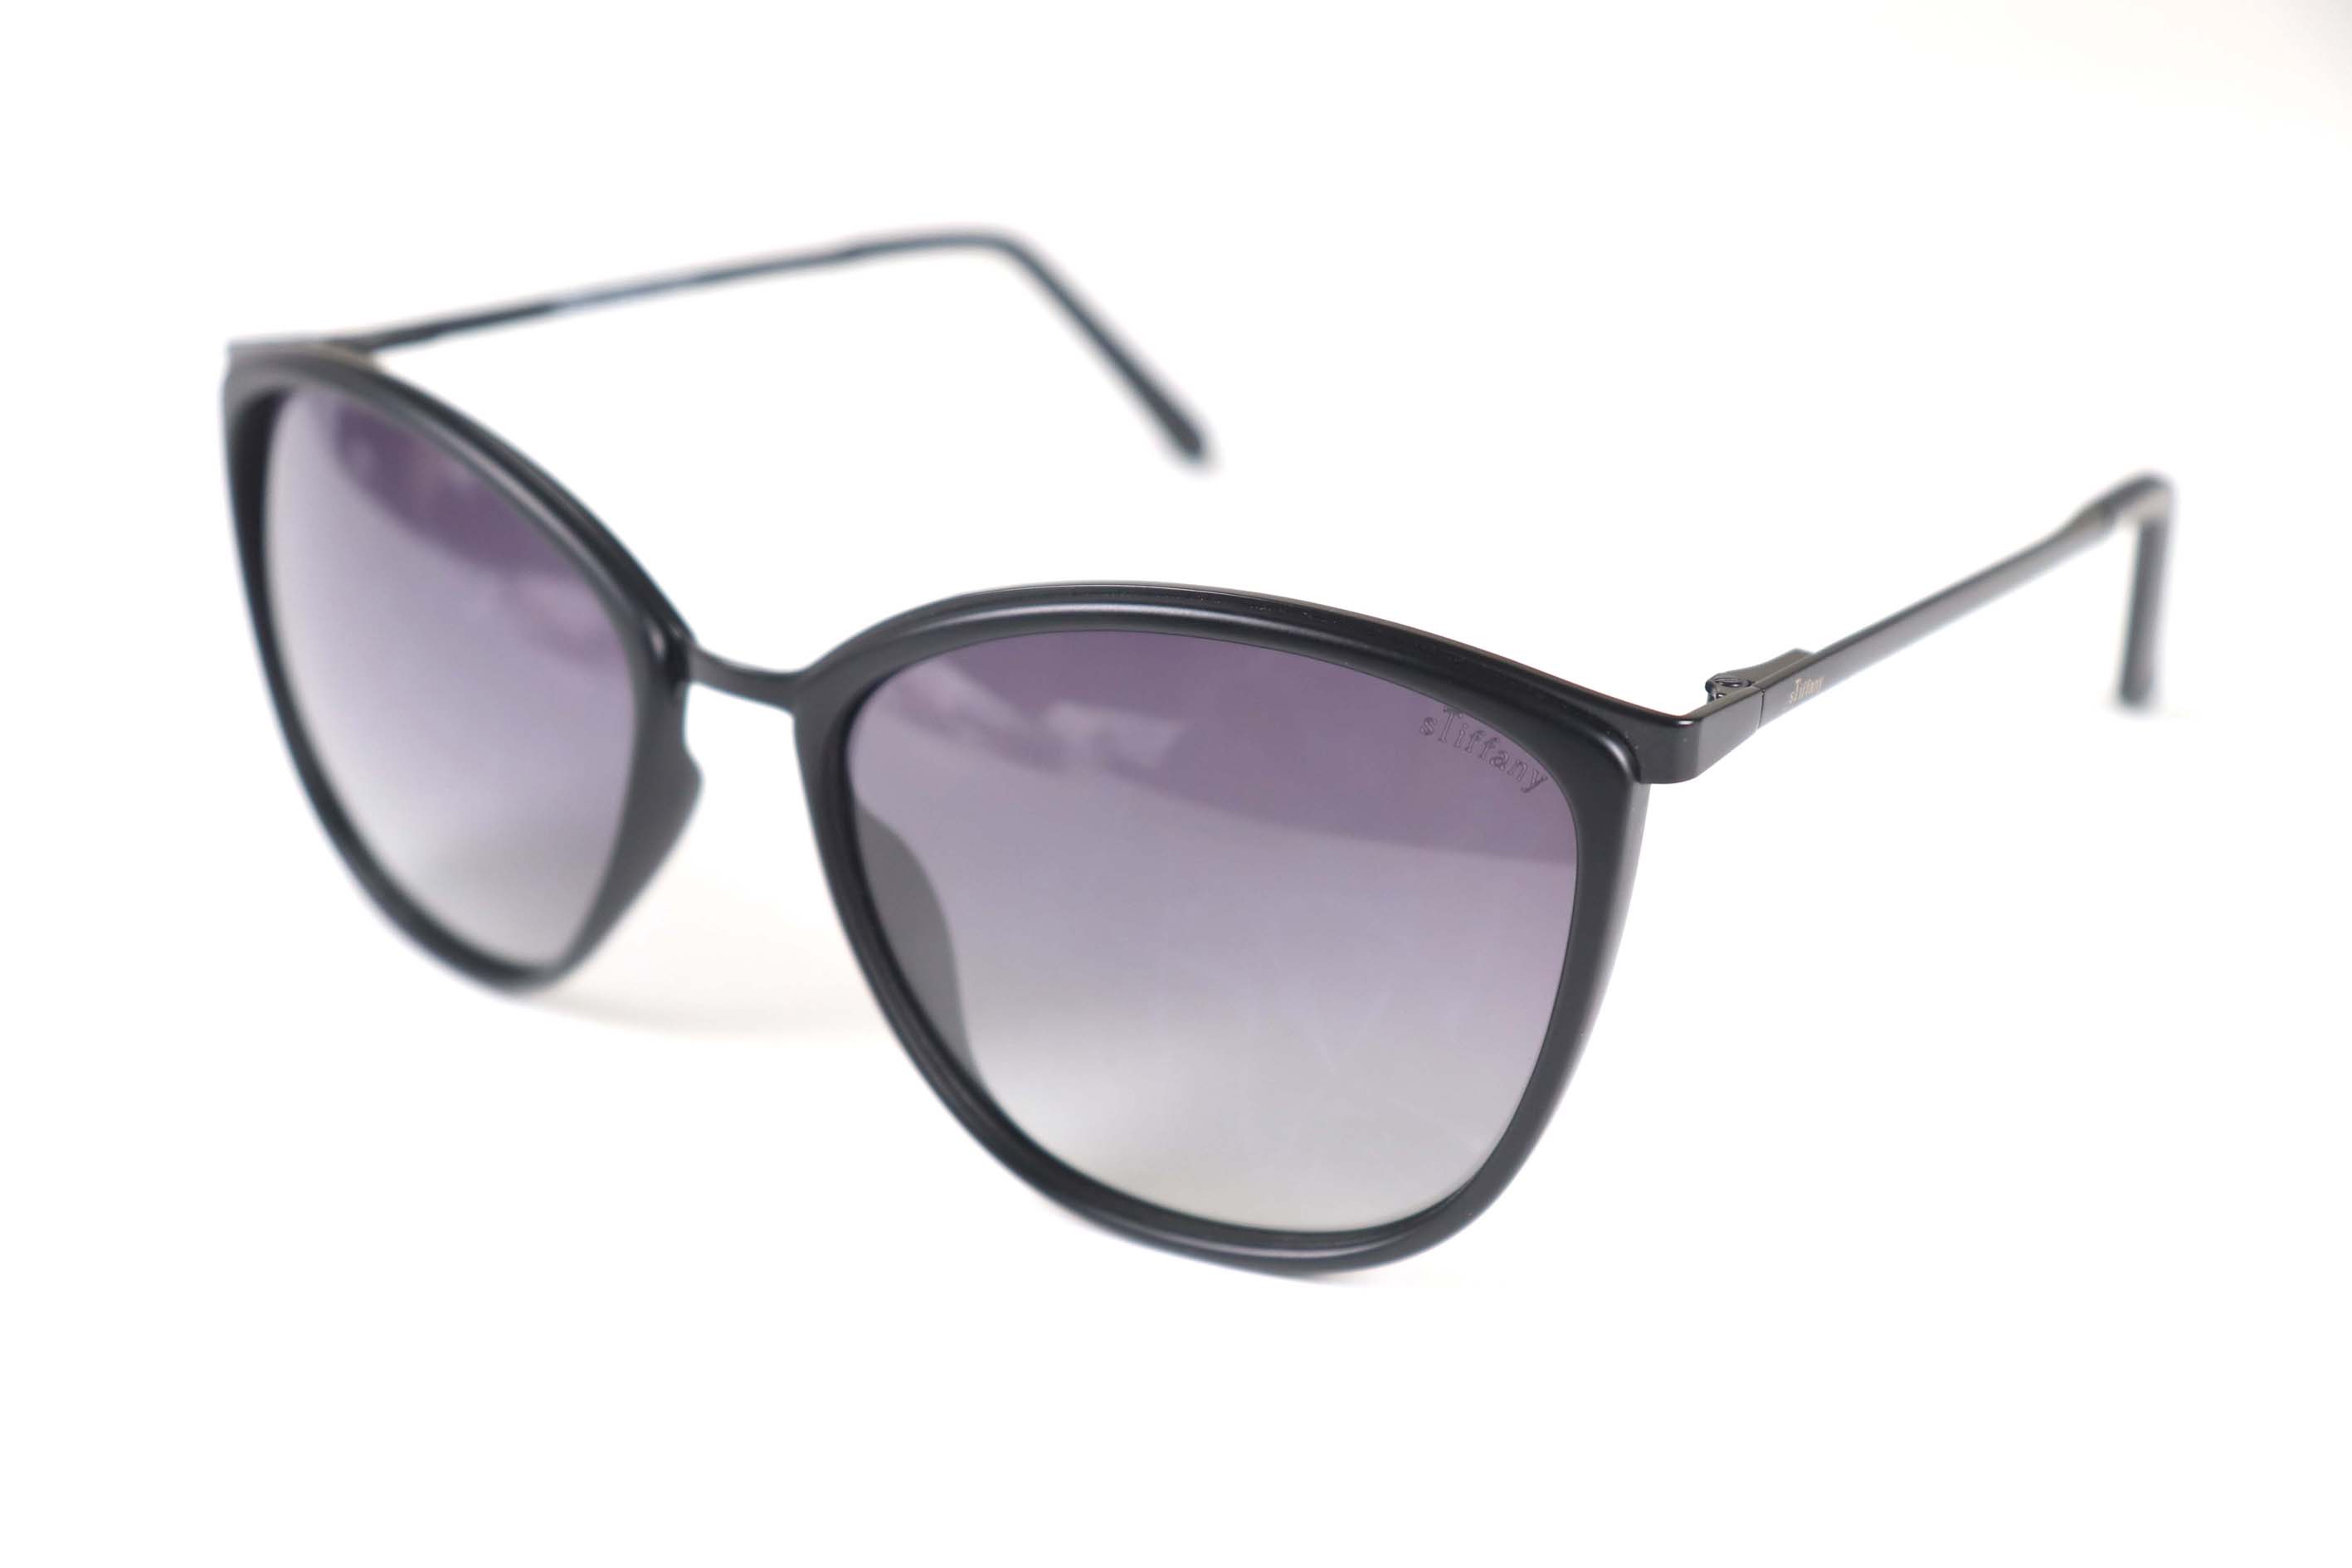 Stiffany Sunglasses-OR-GSA8017-C3-S